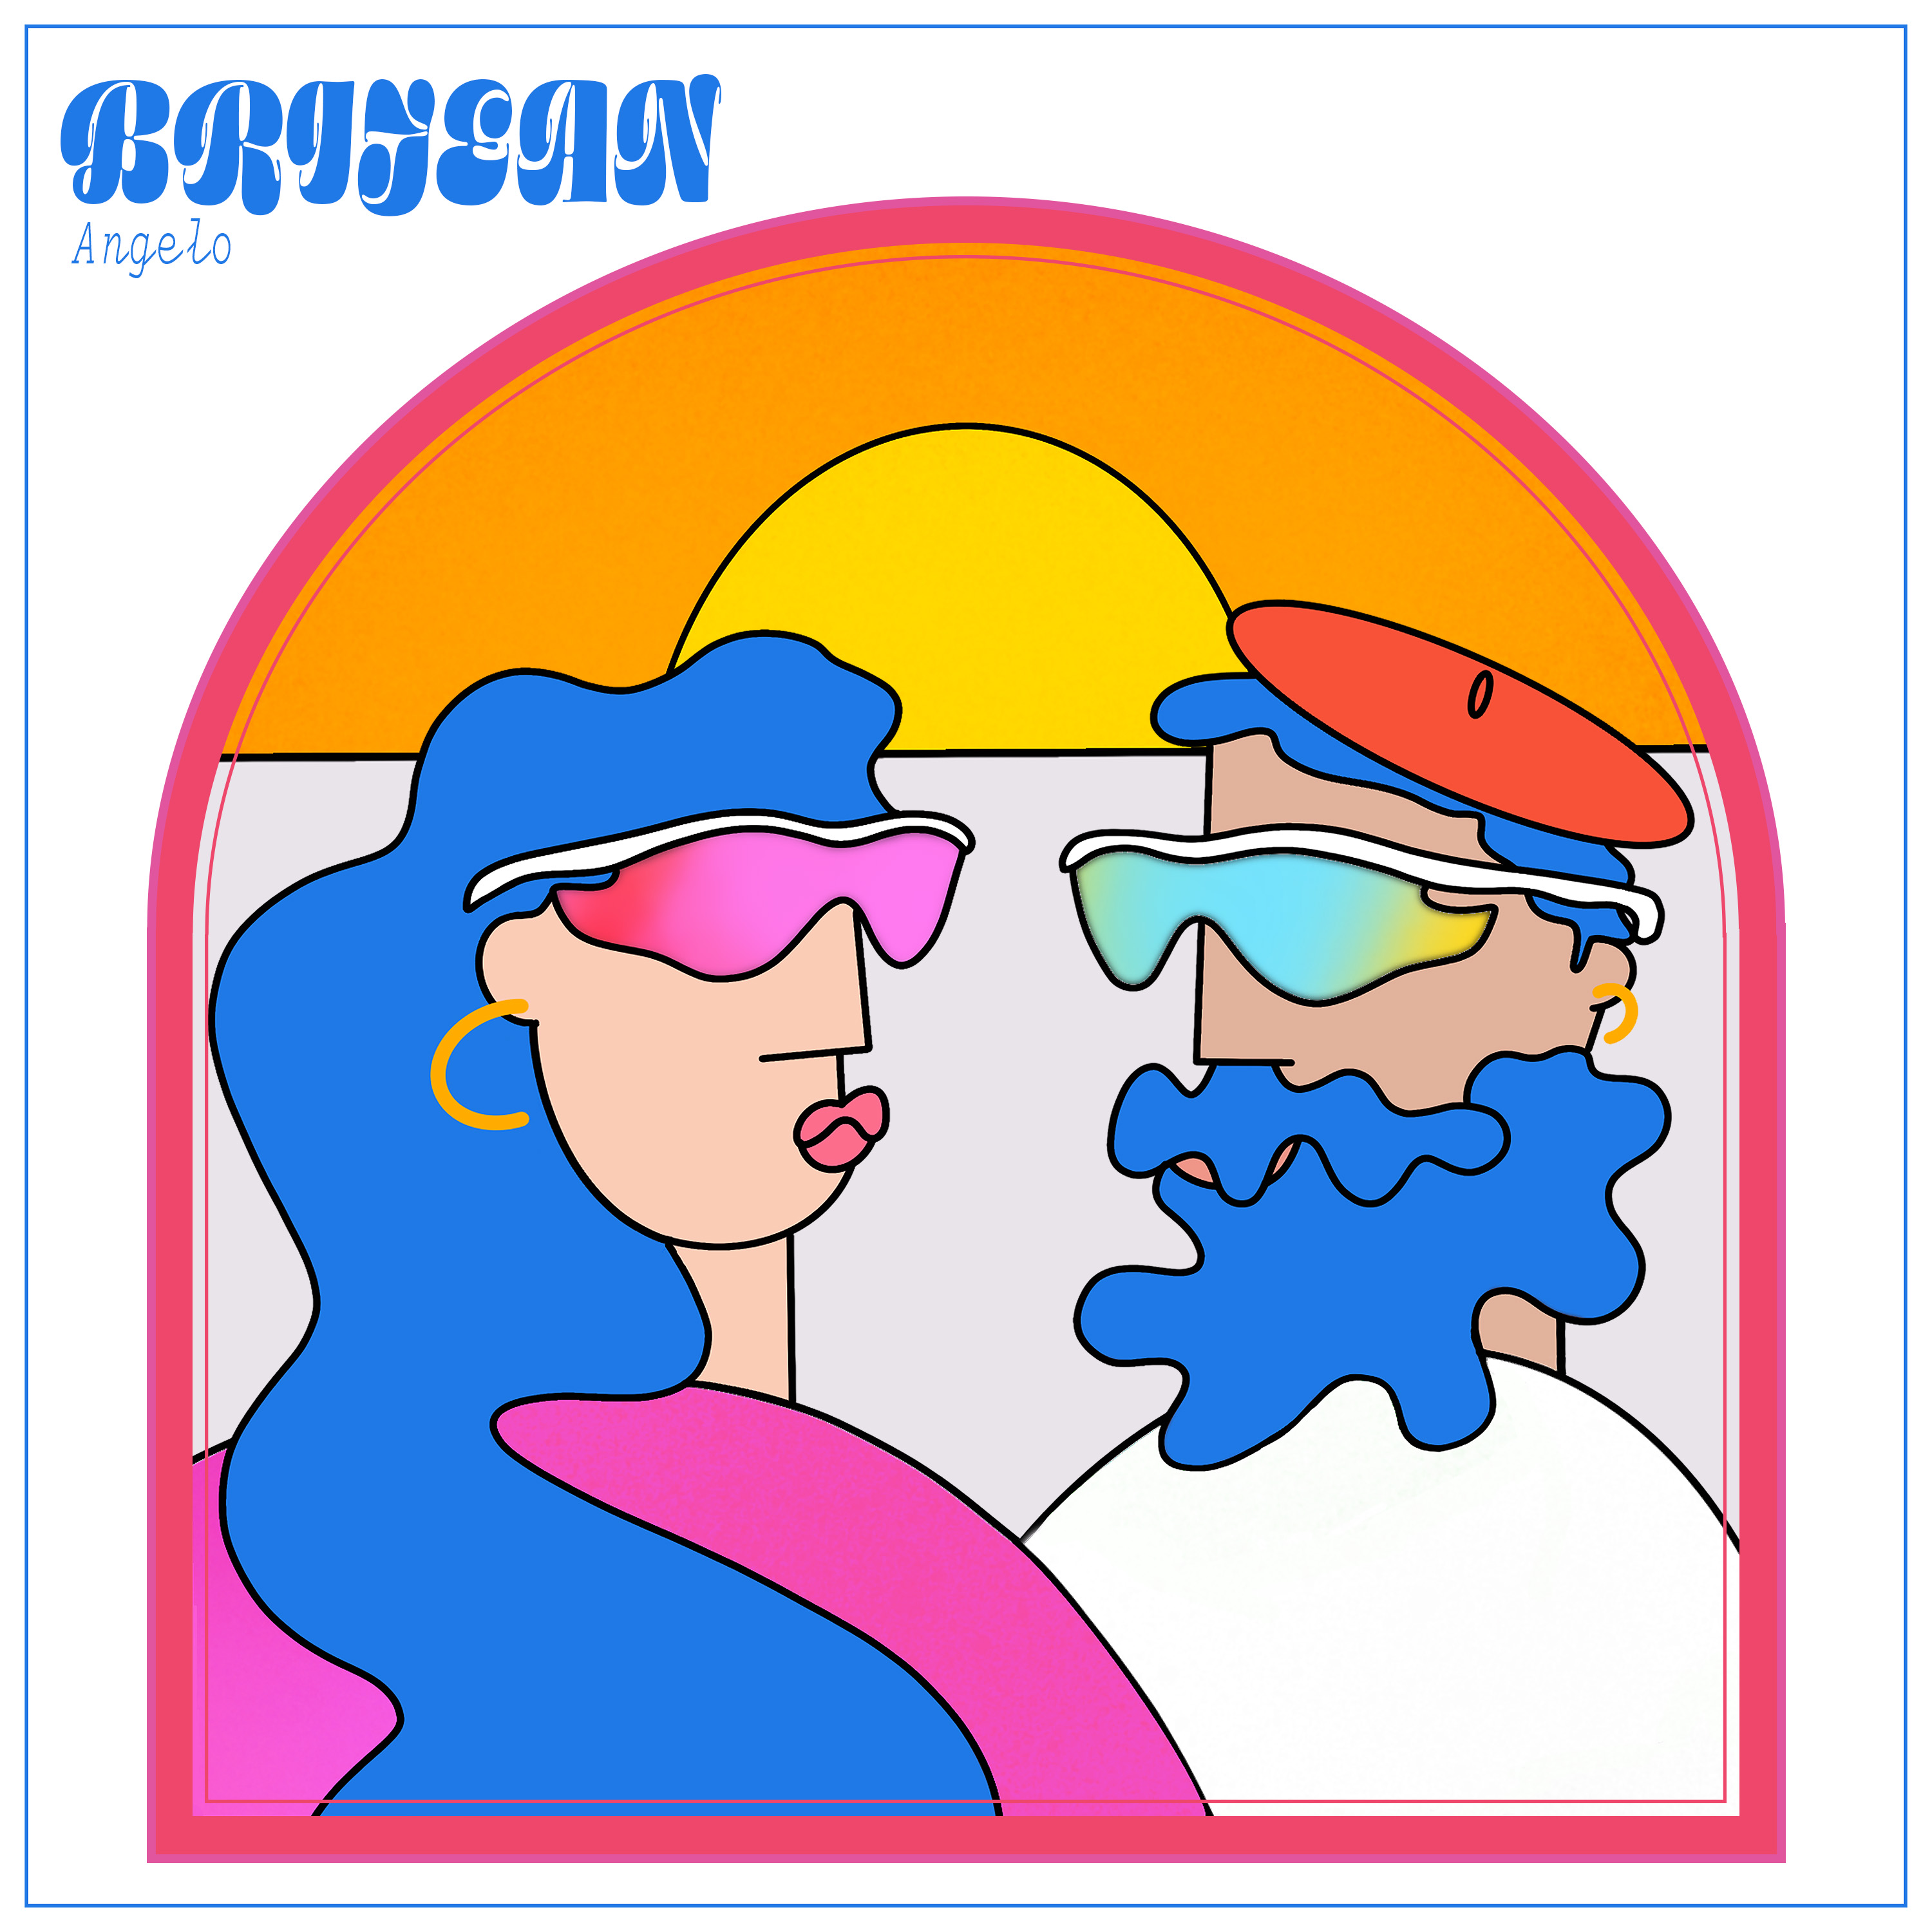 Brijean - Angelo (Ltd Pink and Blue vinyl)